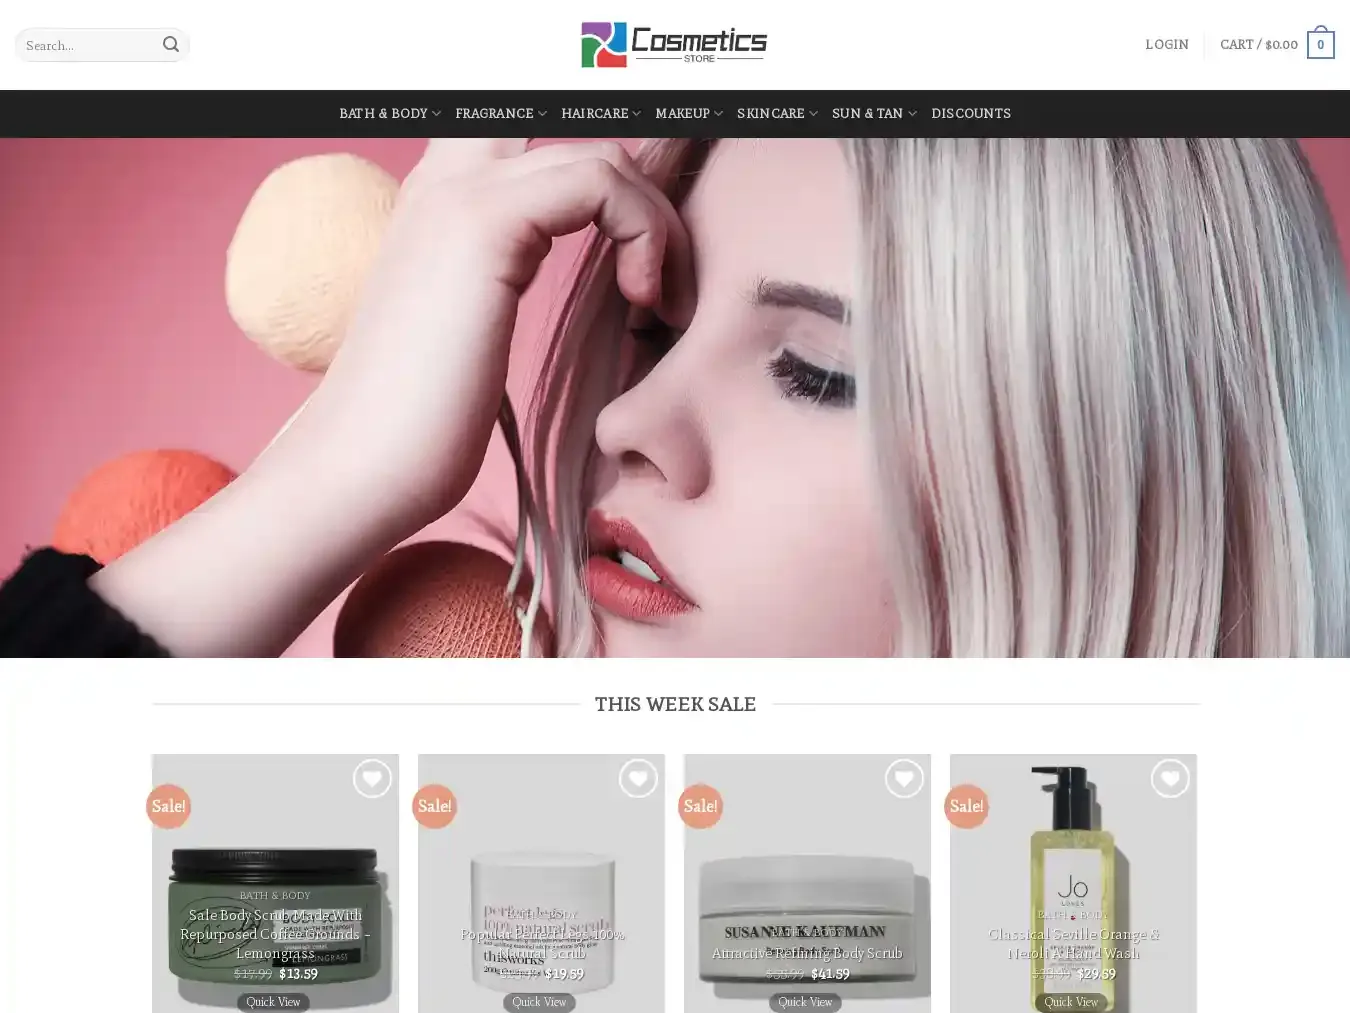 Cosmeticoptimalus.com Fraudulent Fashion website.